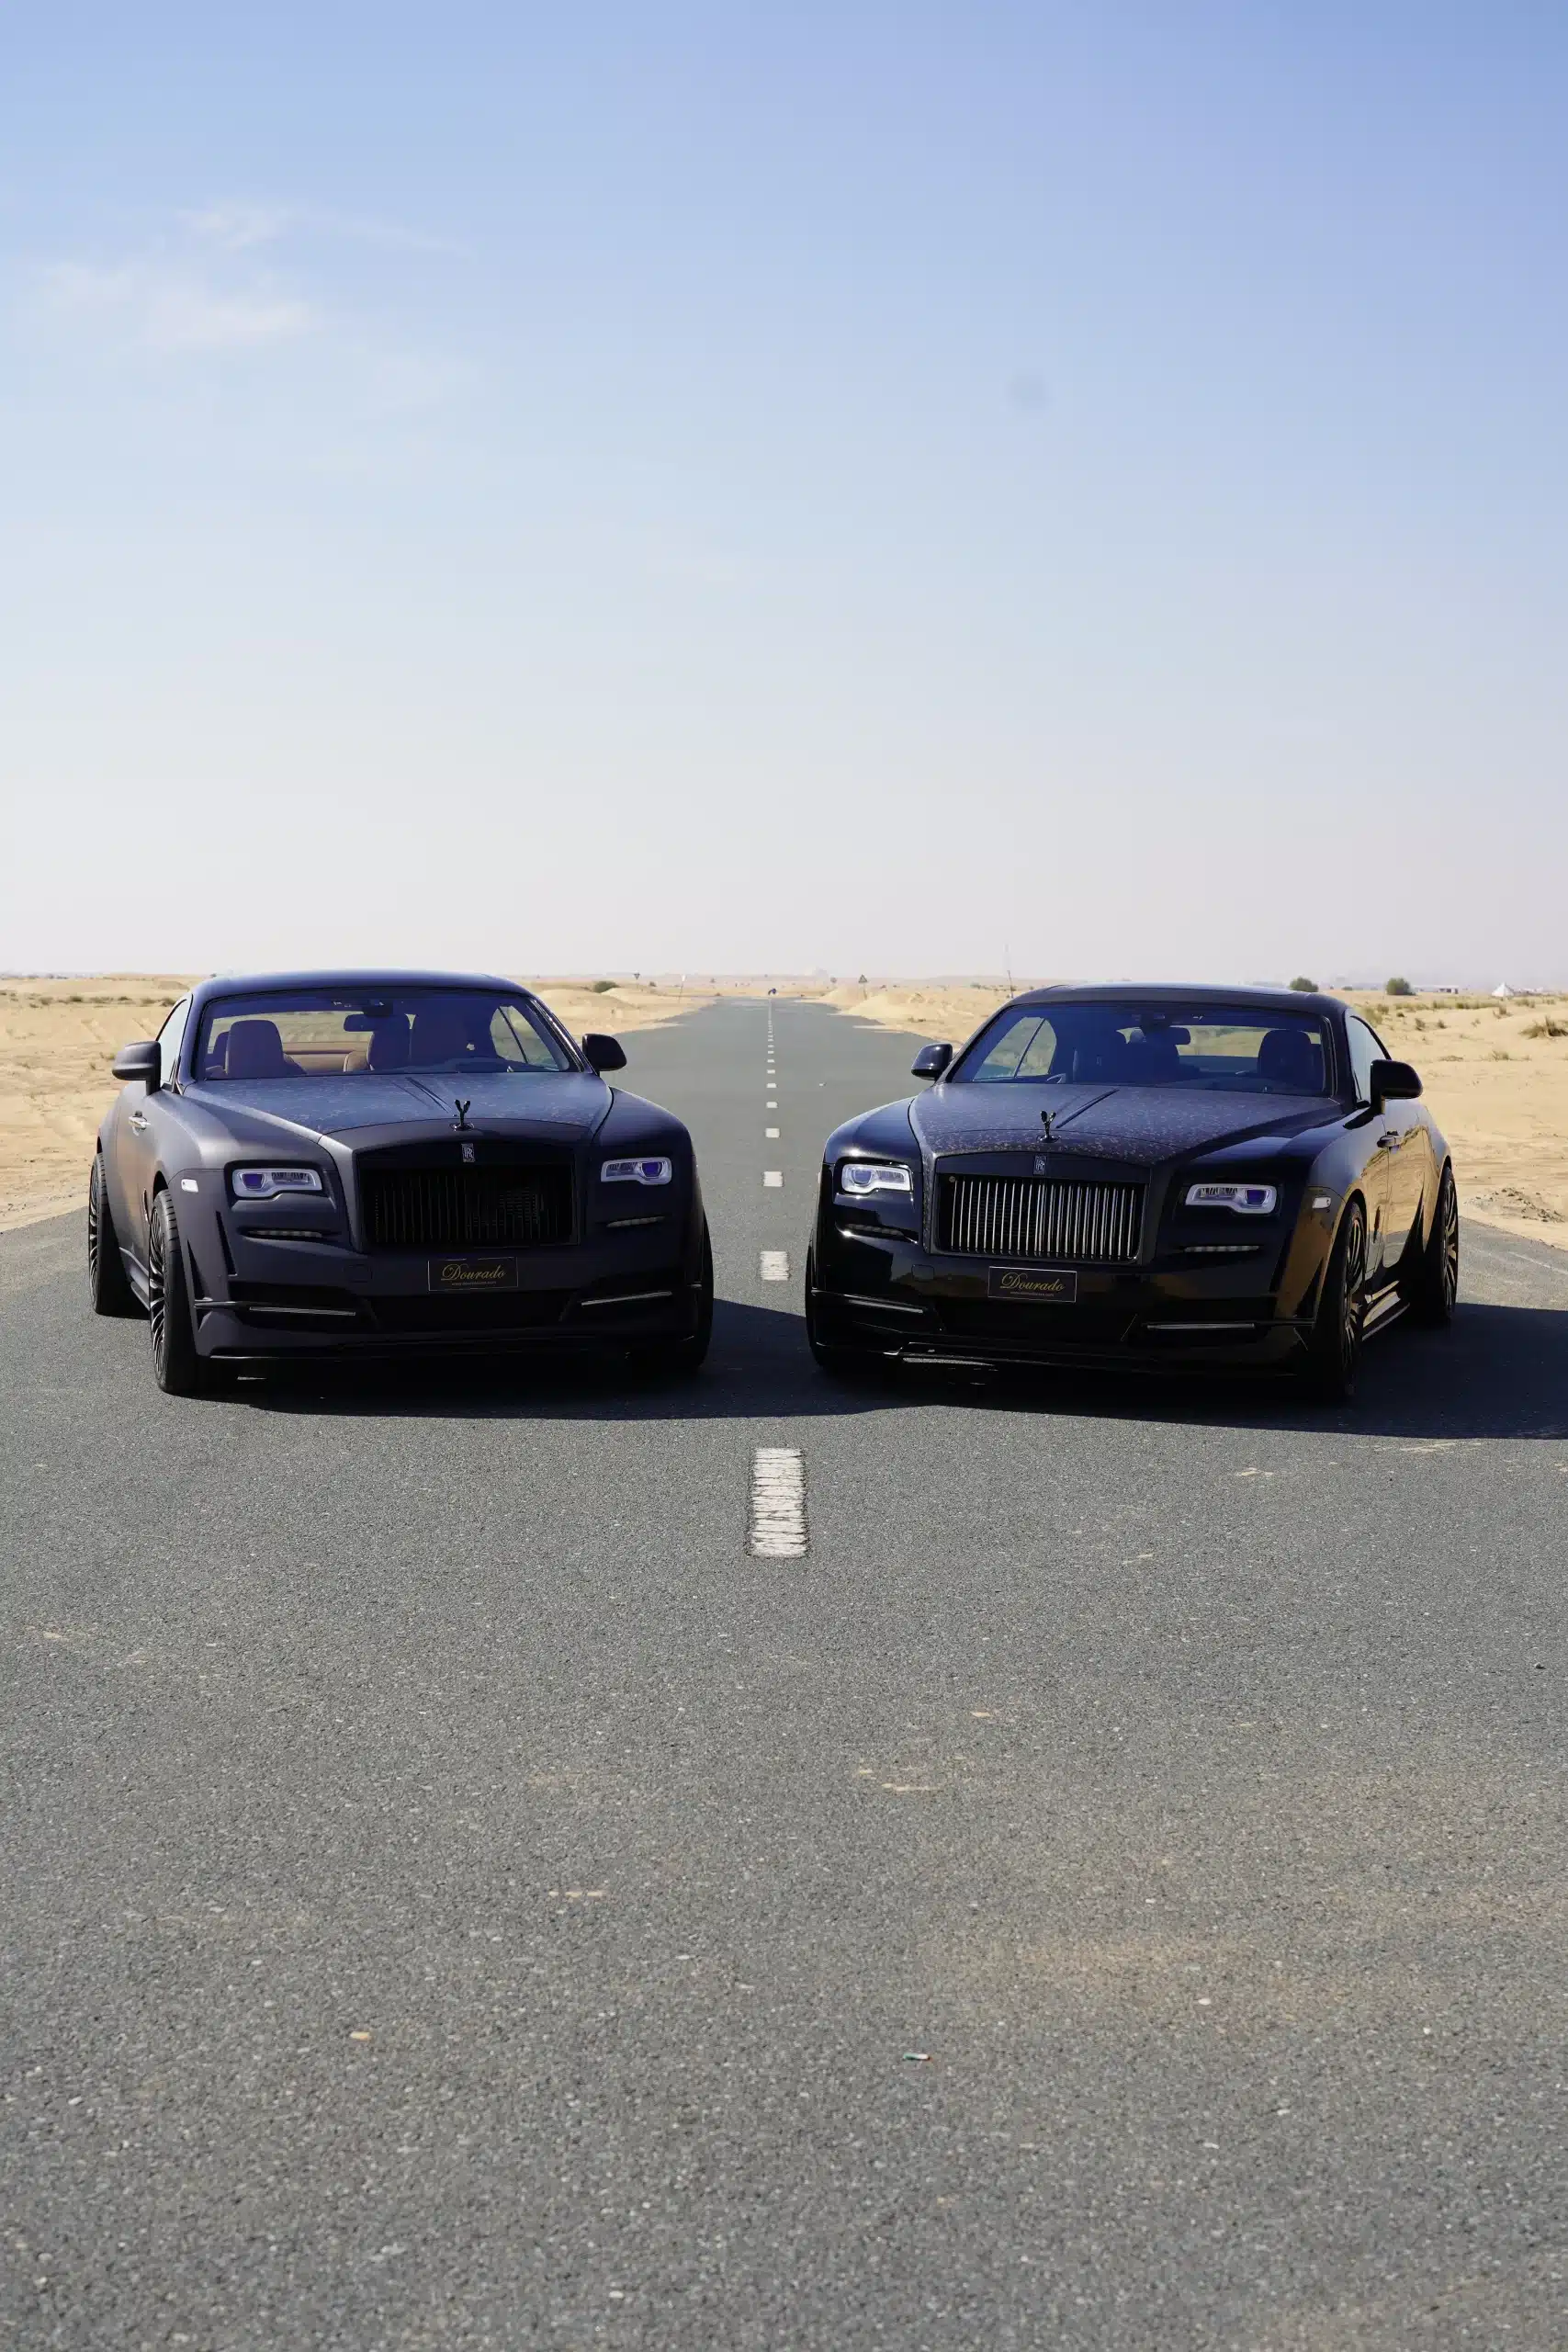 Rolls Royce luxury car for sale in Dubai